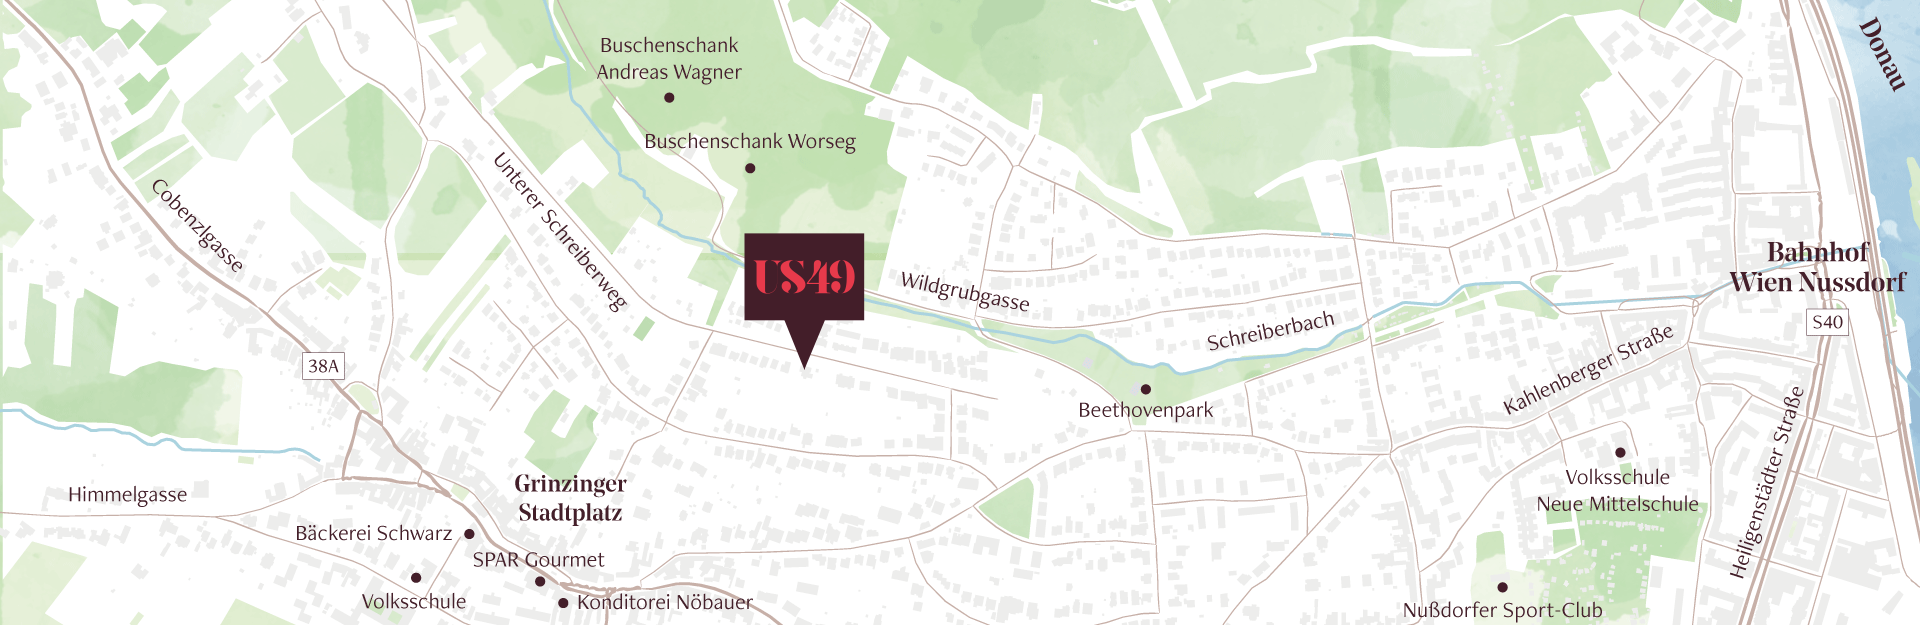 Unterer Schreiberweg 49 - Map Desktop